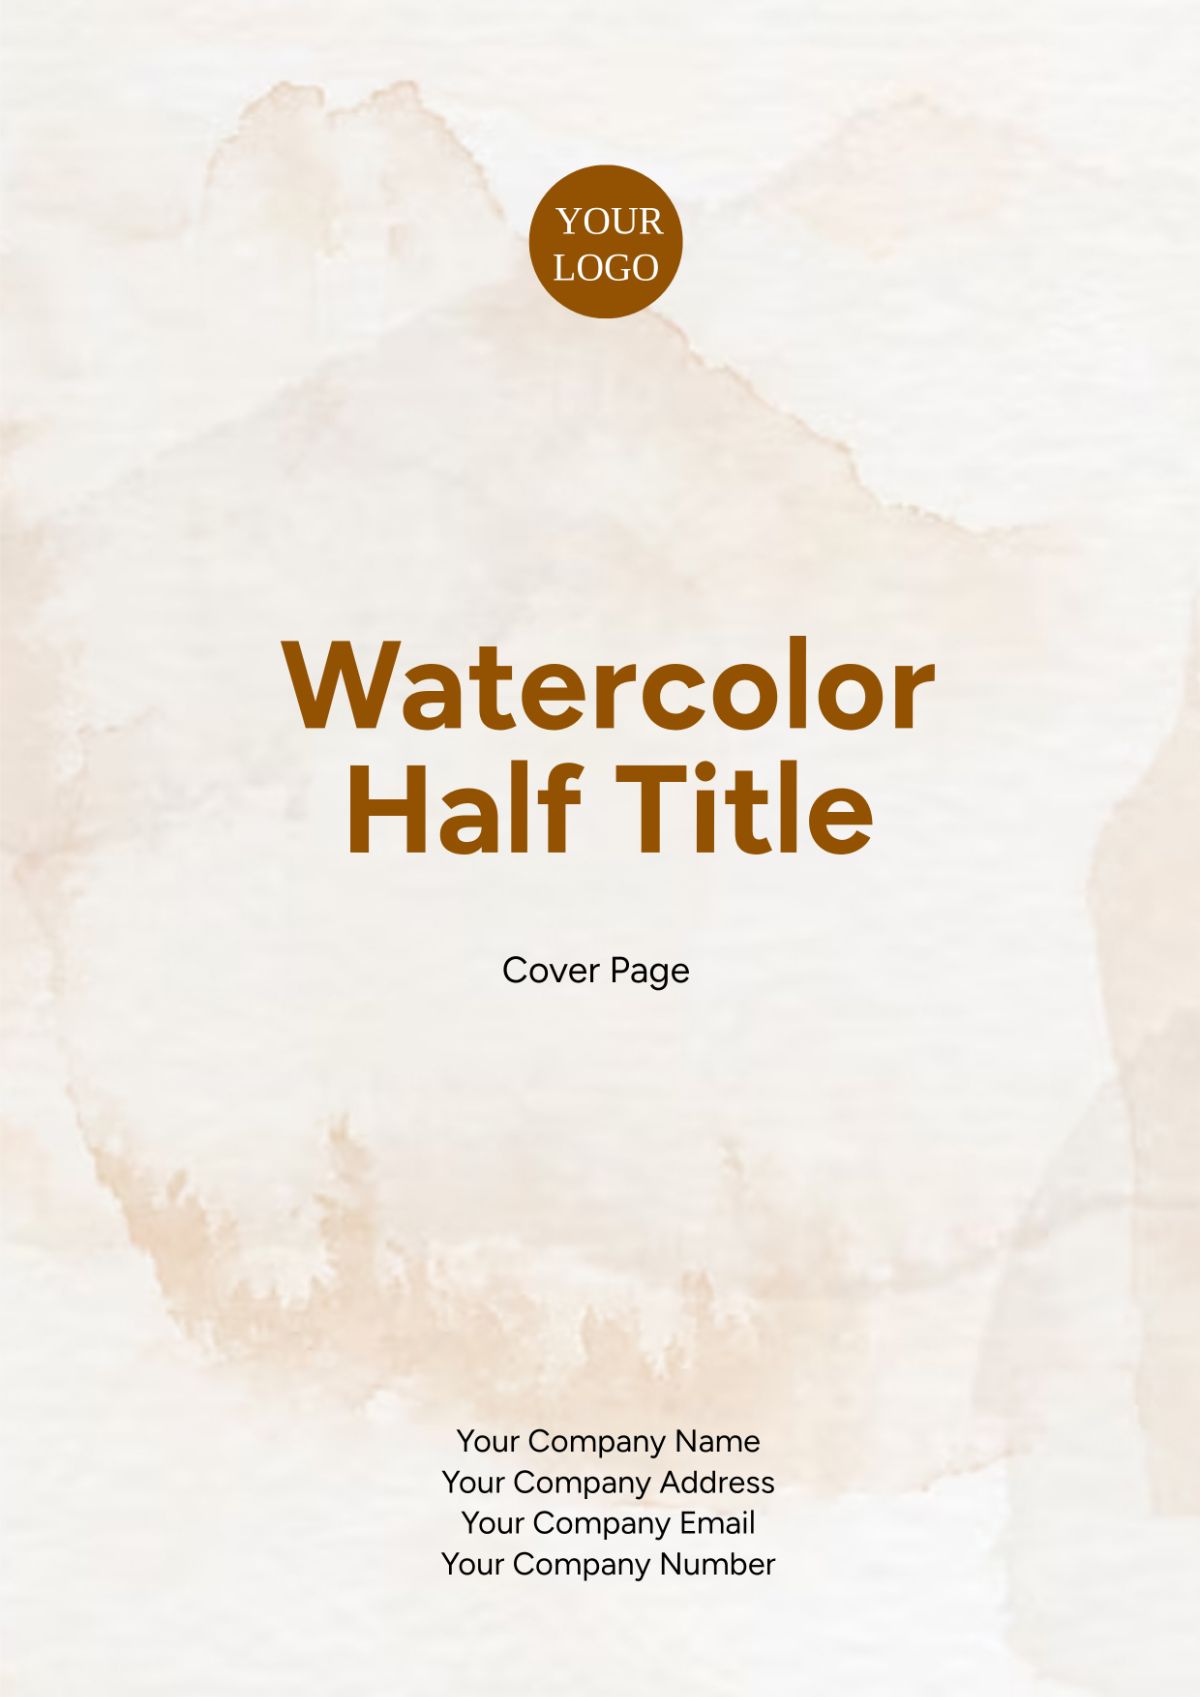 Watercolor Half Title Cover Page